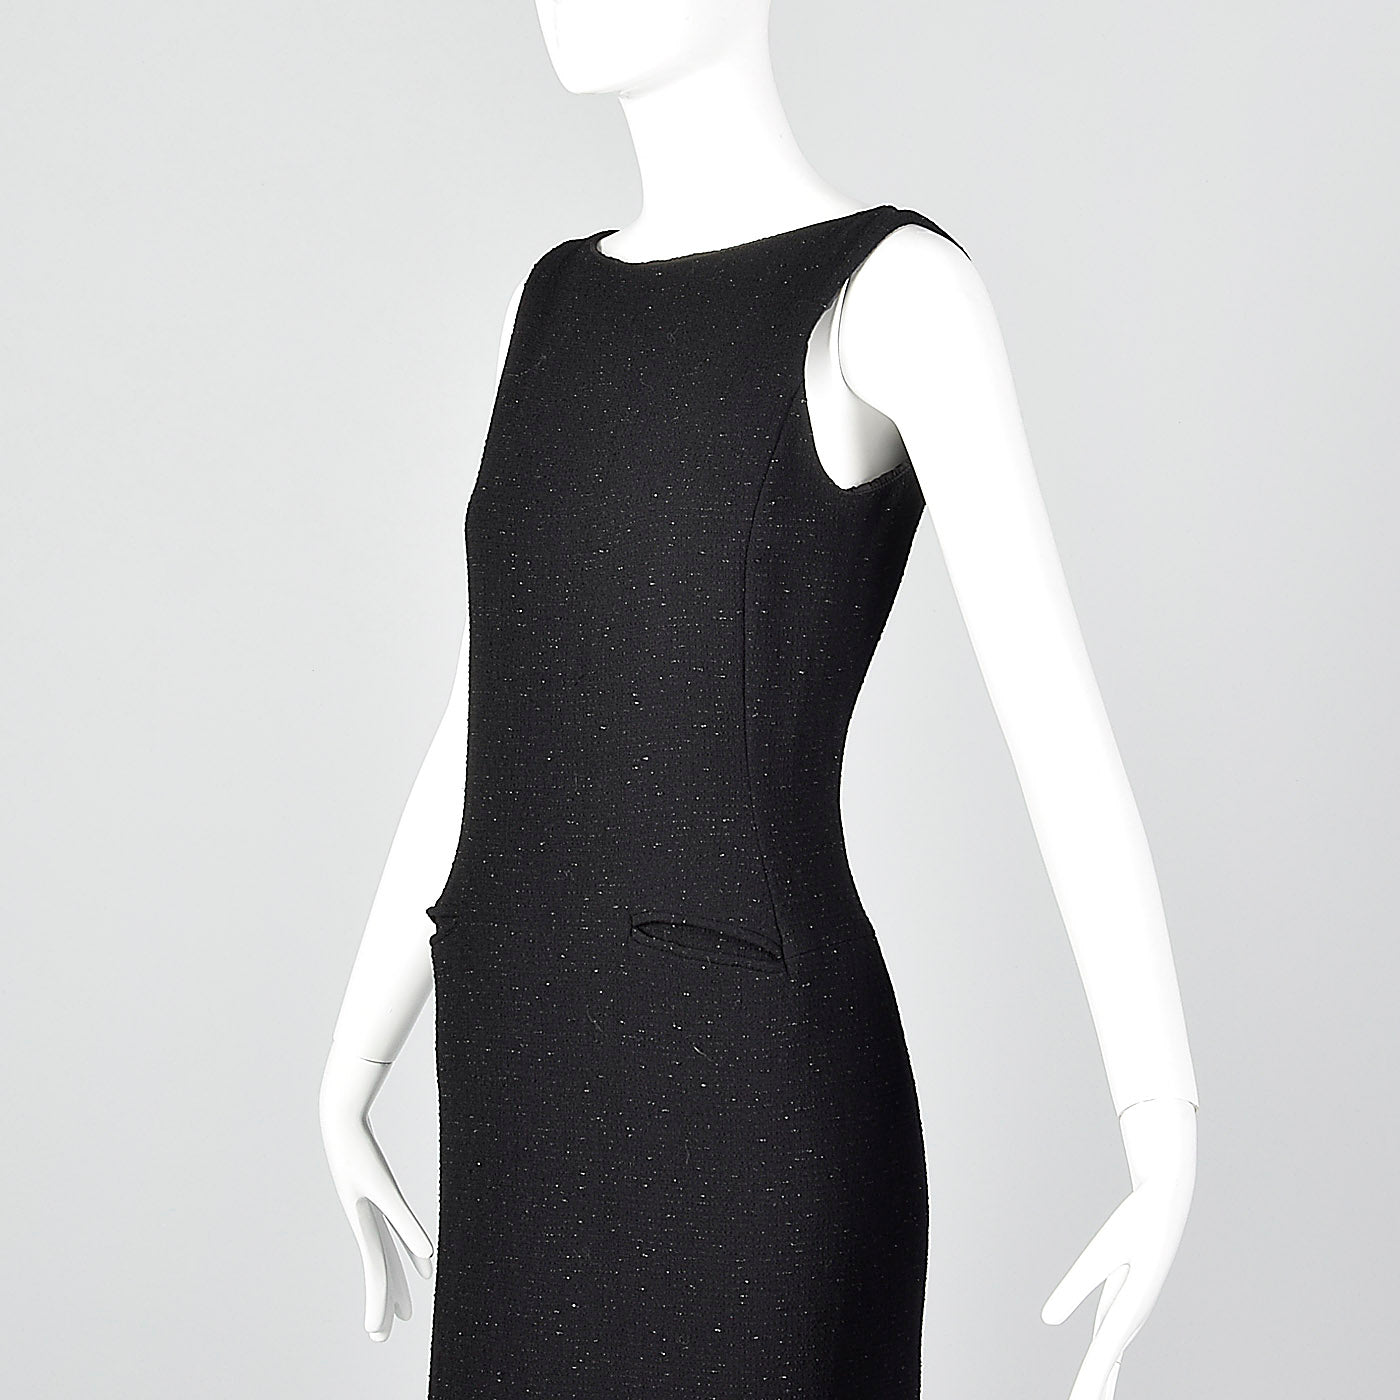 Moschino Cheap & Chic Tight Black Dress with Lurex Threads